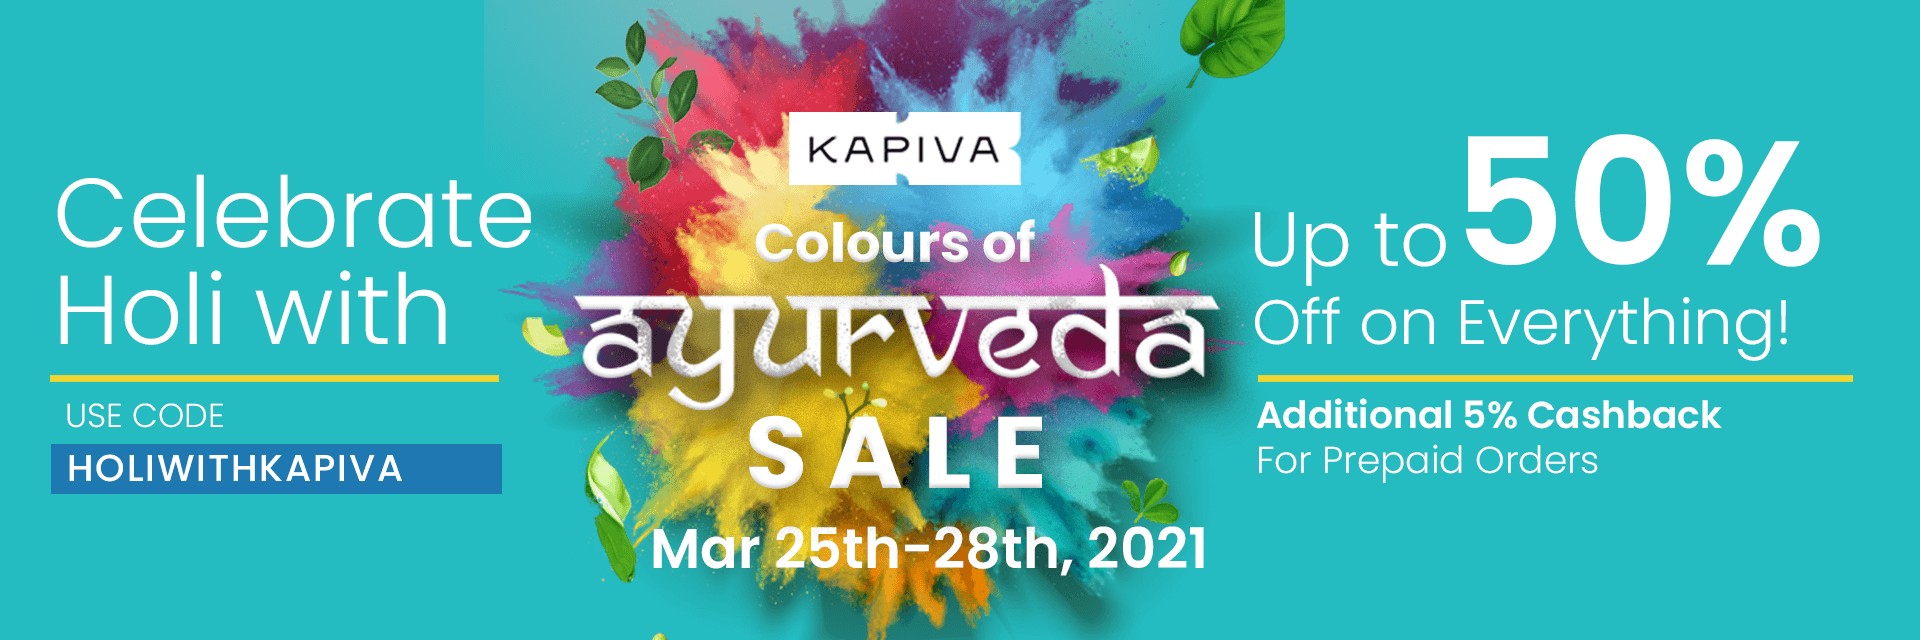 kapiva colours of ayurveda sale